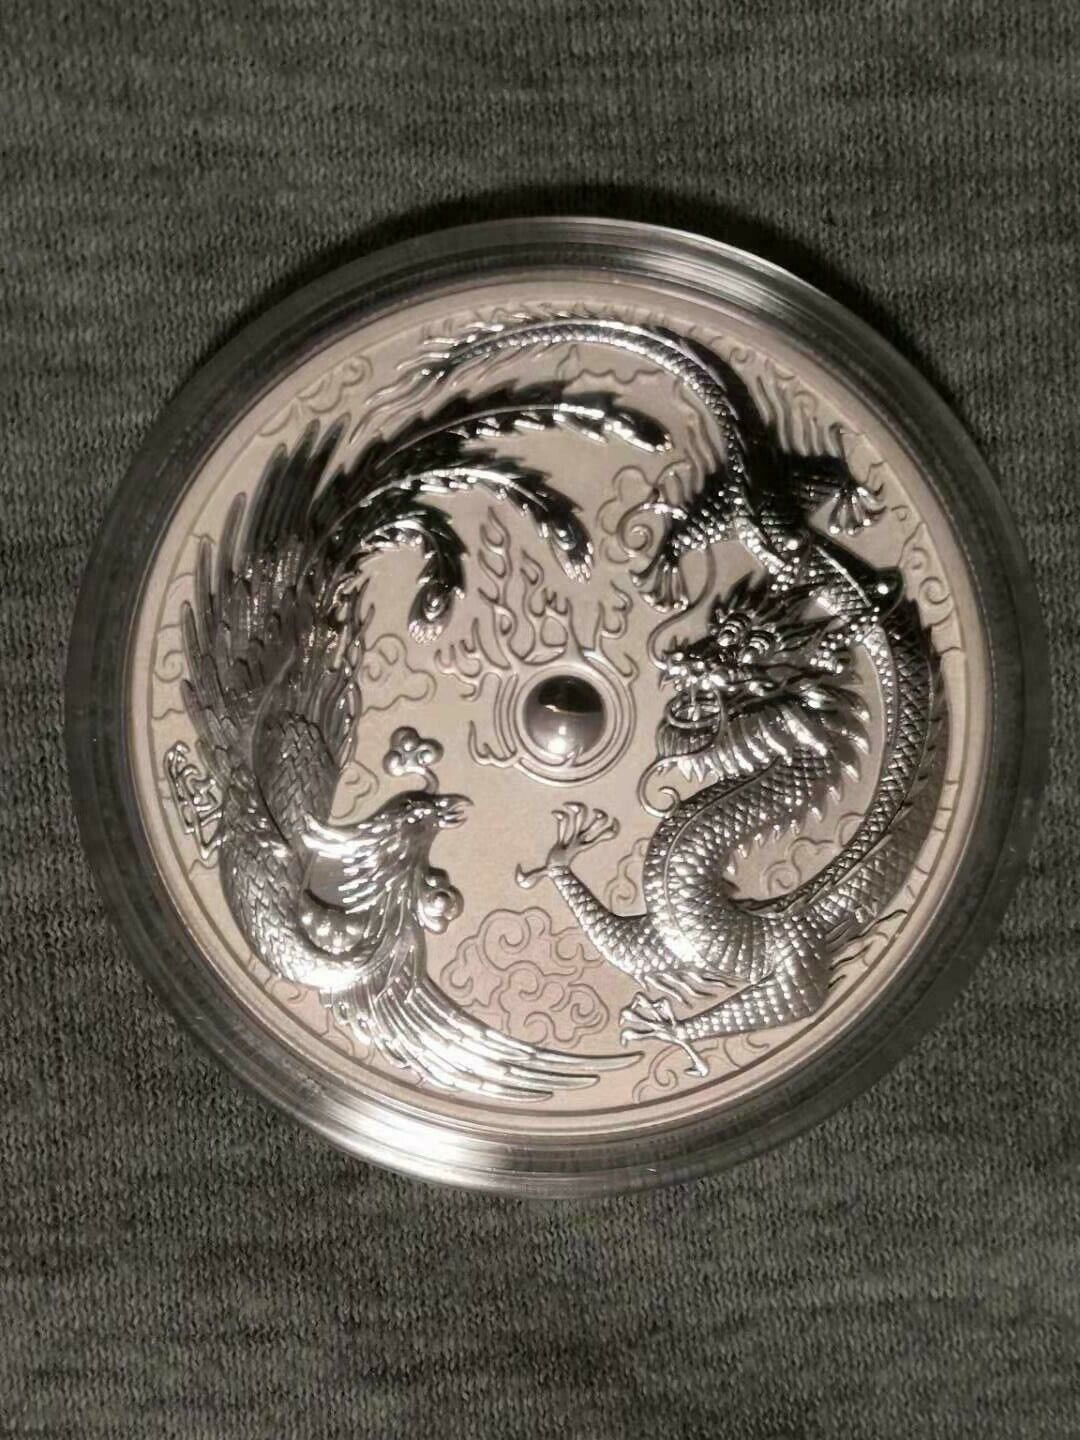 DRAGON & PHOENIX - 1 oz Pure Silver BU Coin in Capsule - Perth Mint - The Coin Shoppe